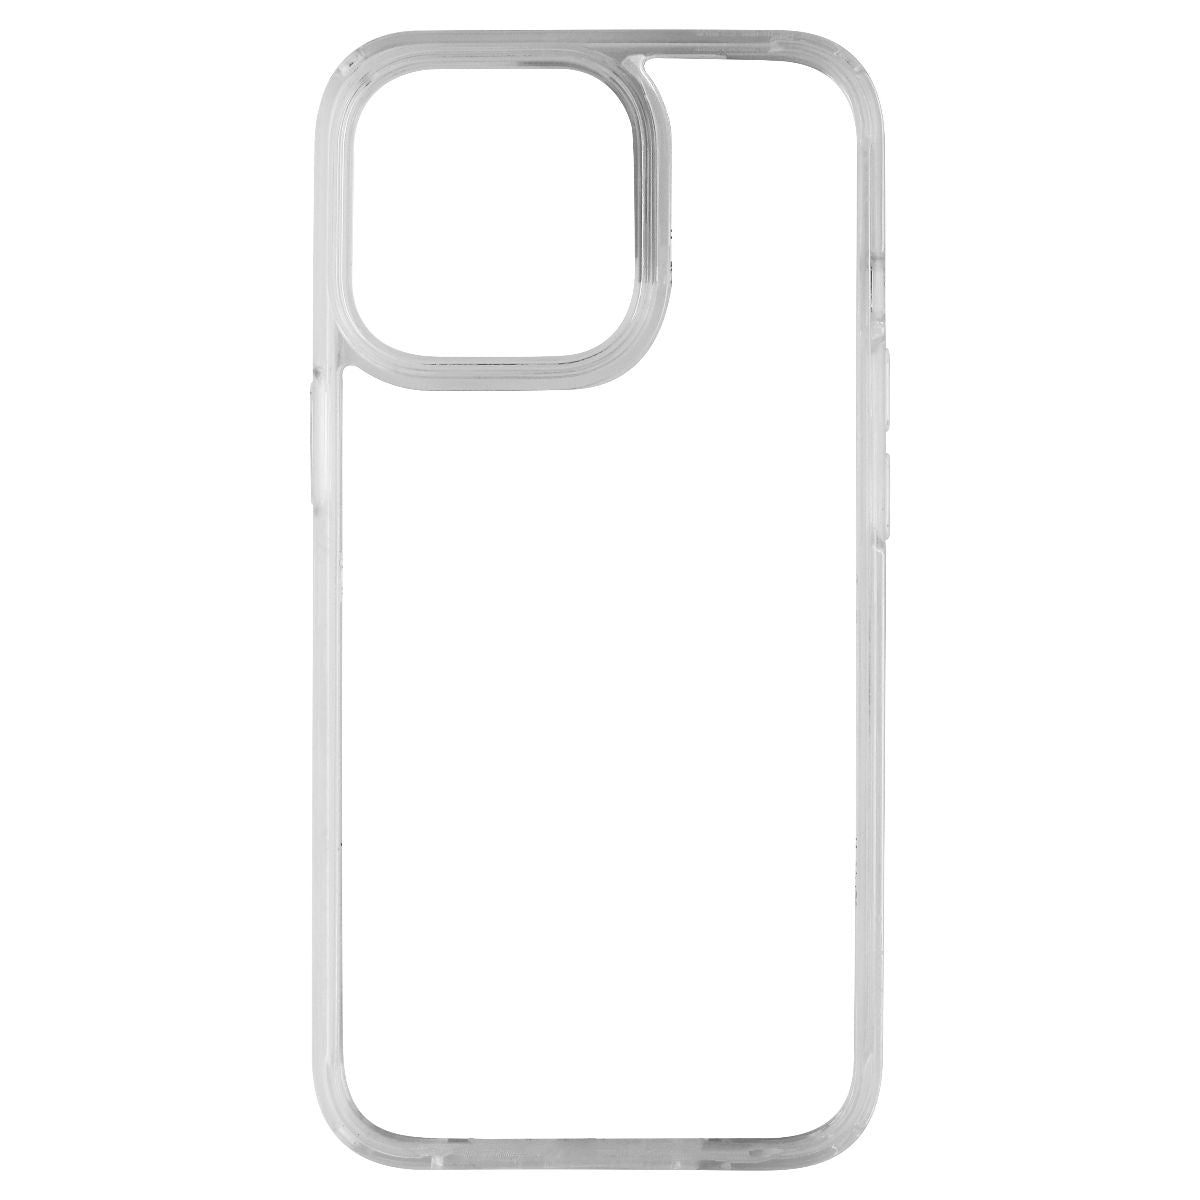 Spigen Crystal Hybrid Designed for iPhone 13 Pro Case (2021) - Crystal Clear Cell Phone - Cases, Covers & Skins Spigen    - Simple Cell Bulk Wholesale Pricing - USA Seller